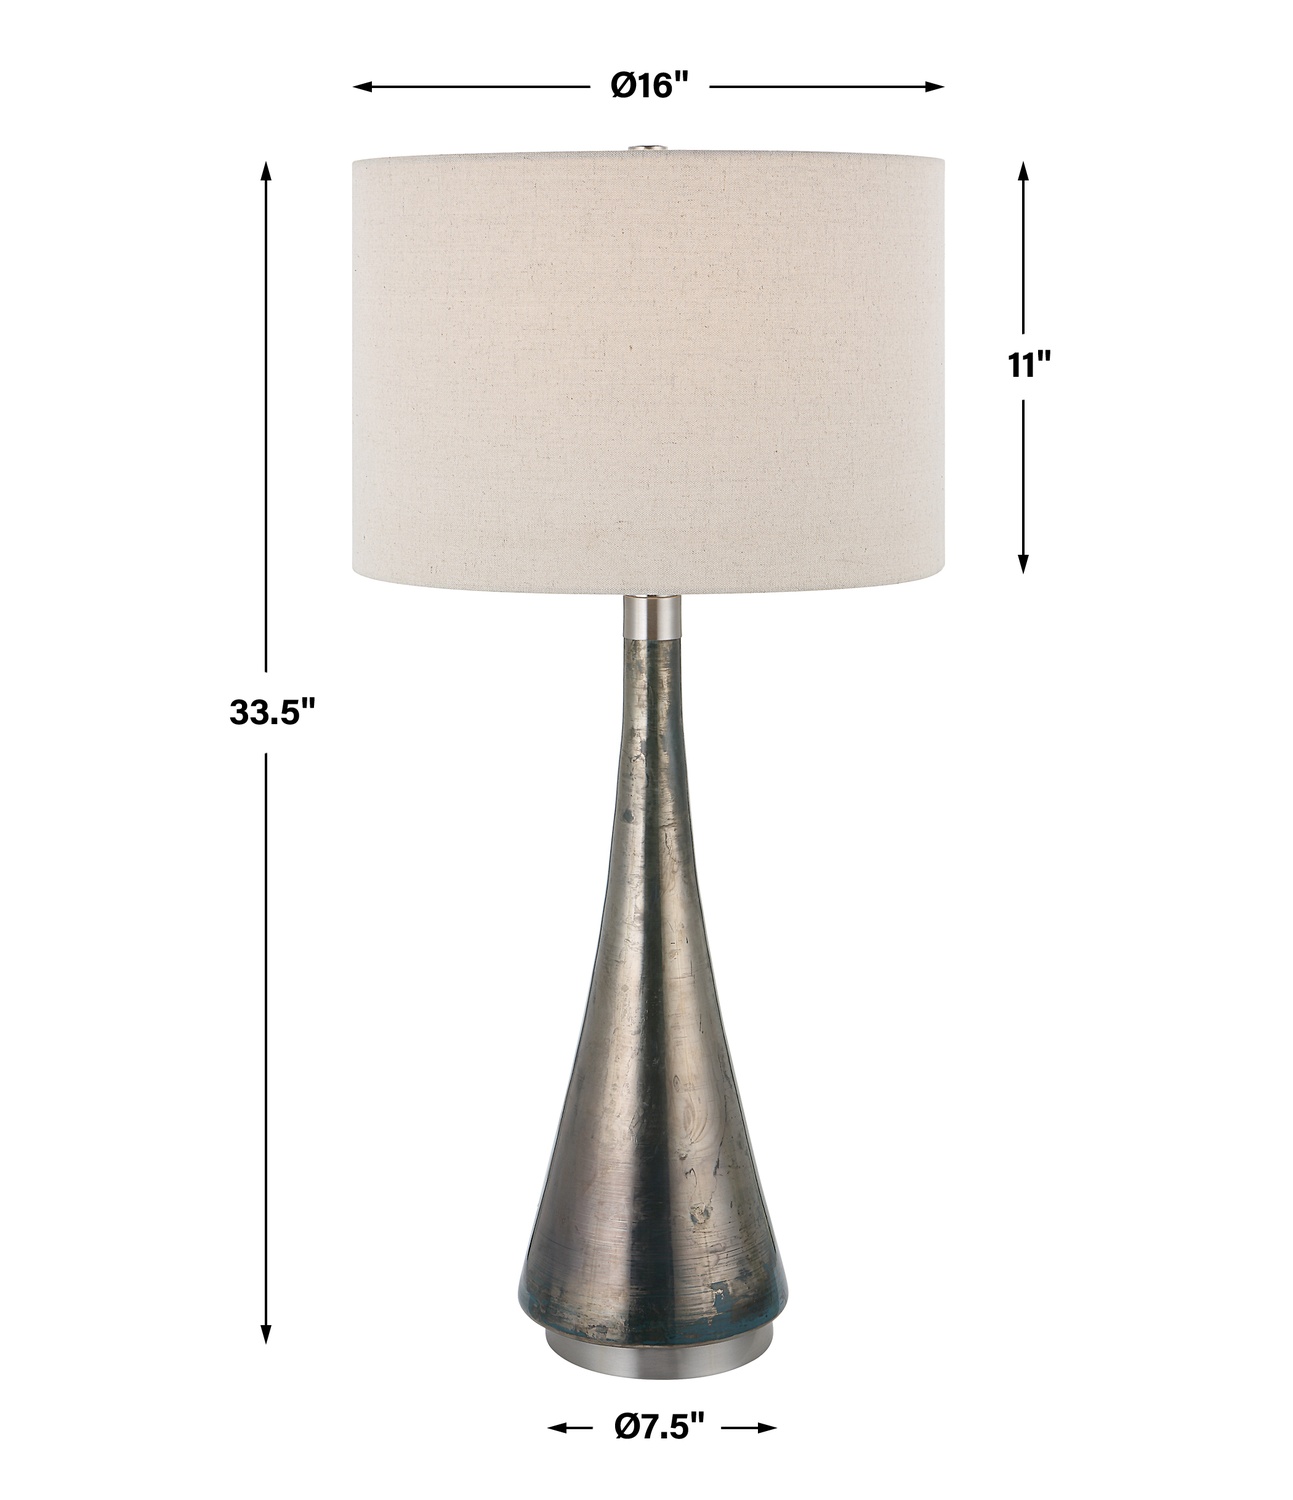 Contour-Metallic Glass Table Lamp